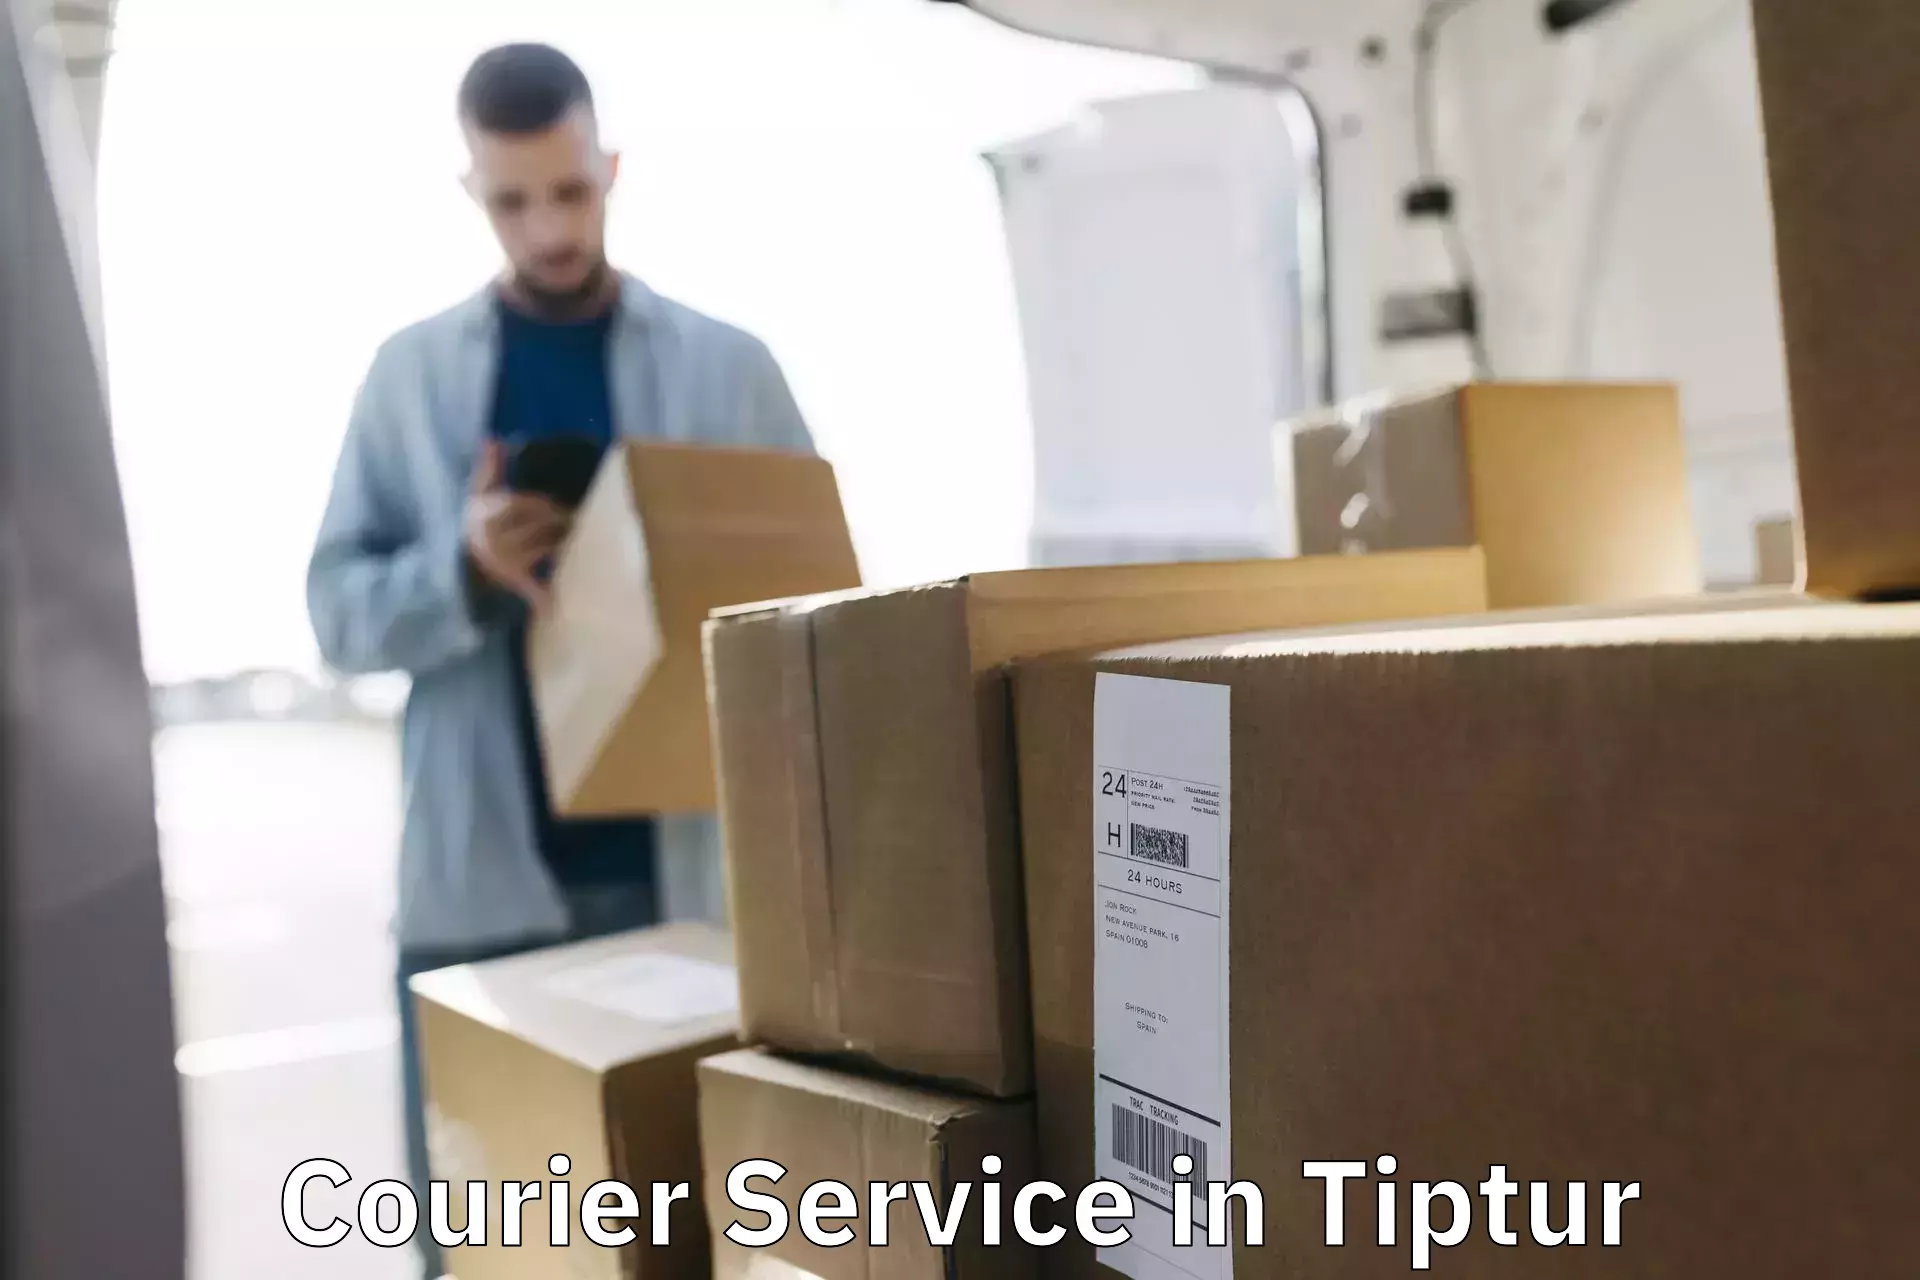 Expedited parcel delivery in Tiptur